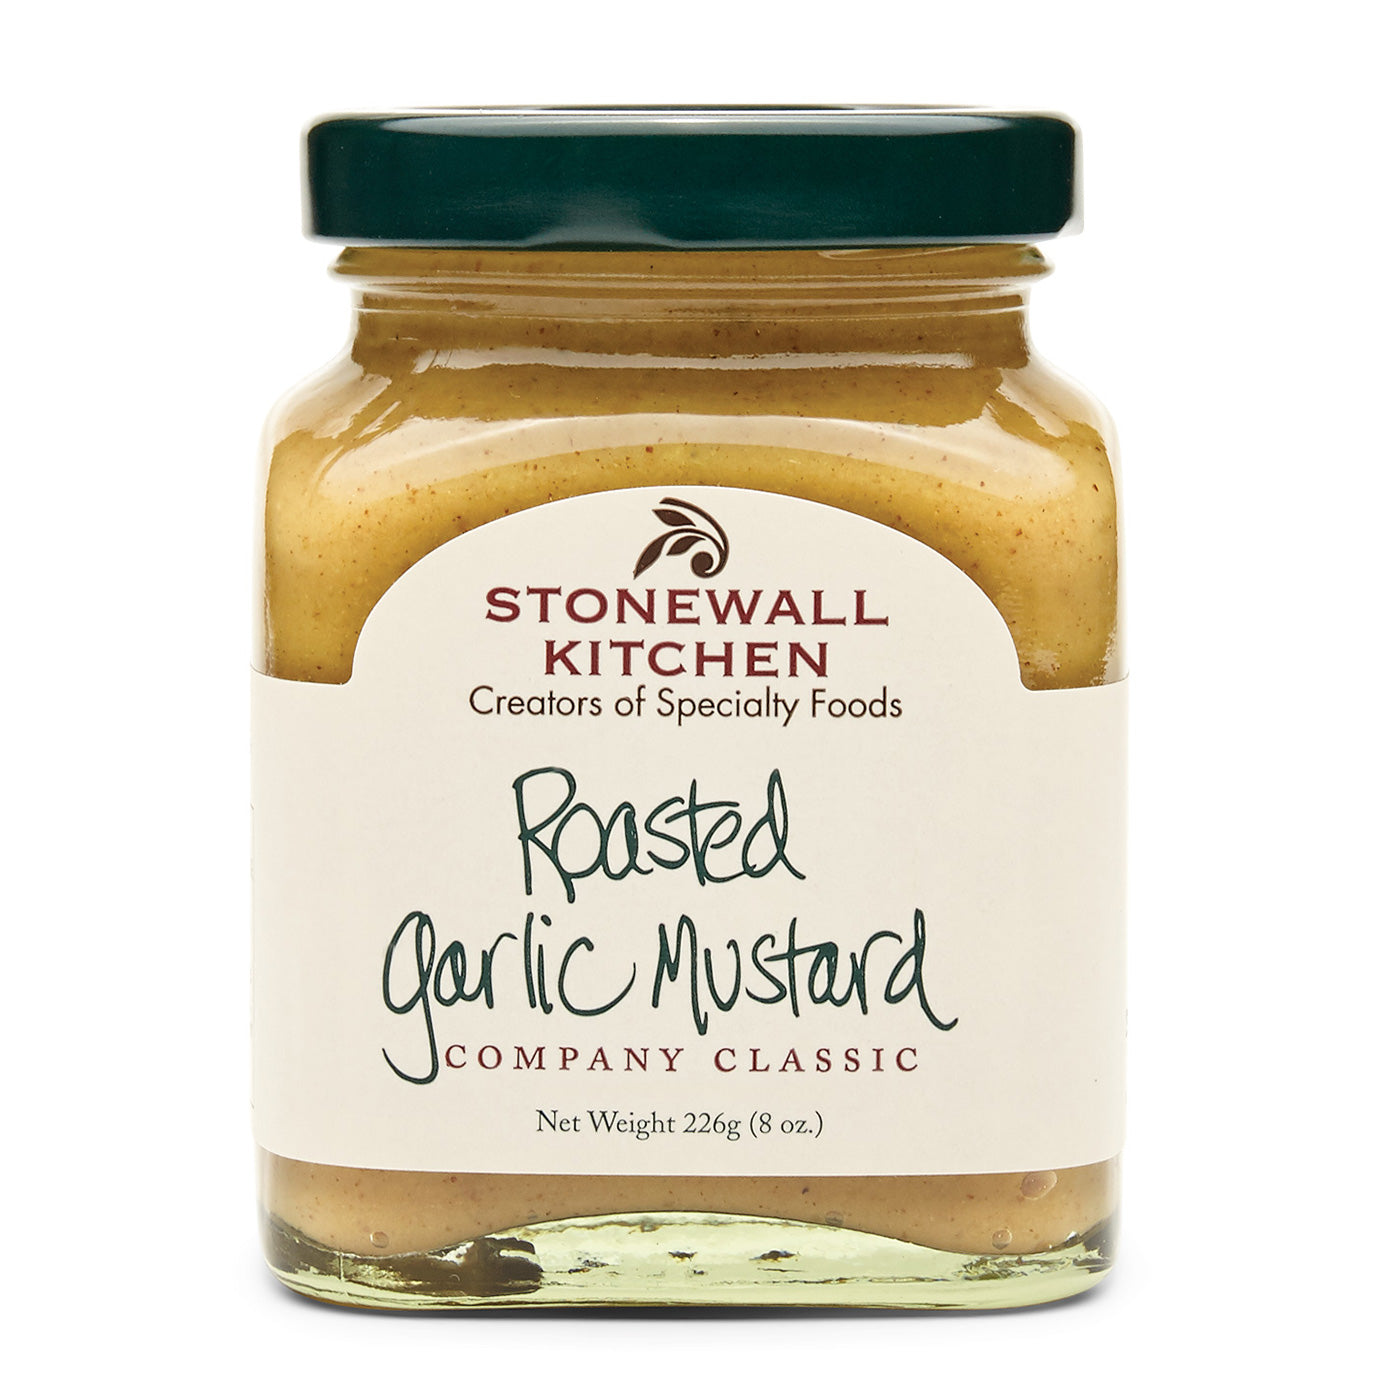 Stonewall Kitchen Roasted Garlic Mustard - Olive Oil Etcetera 